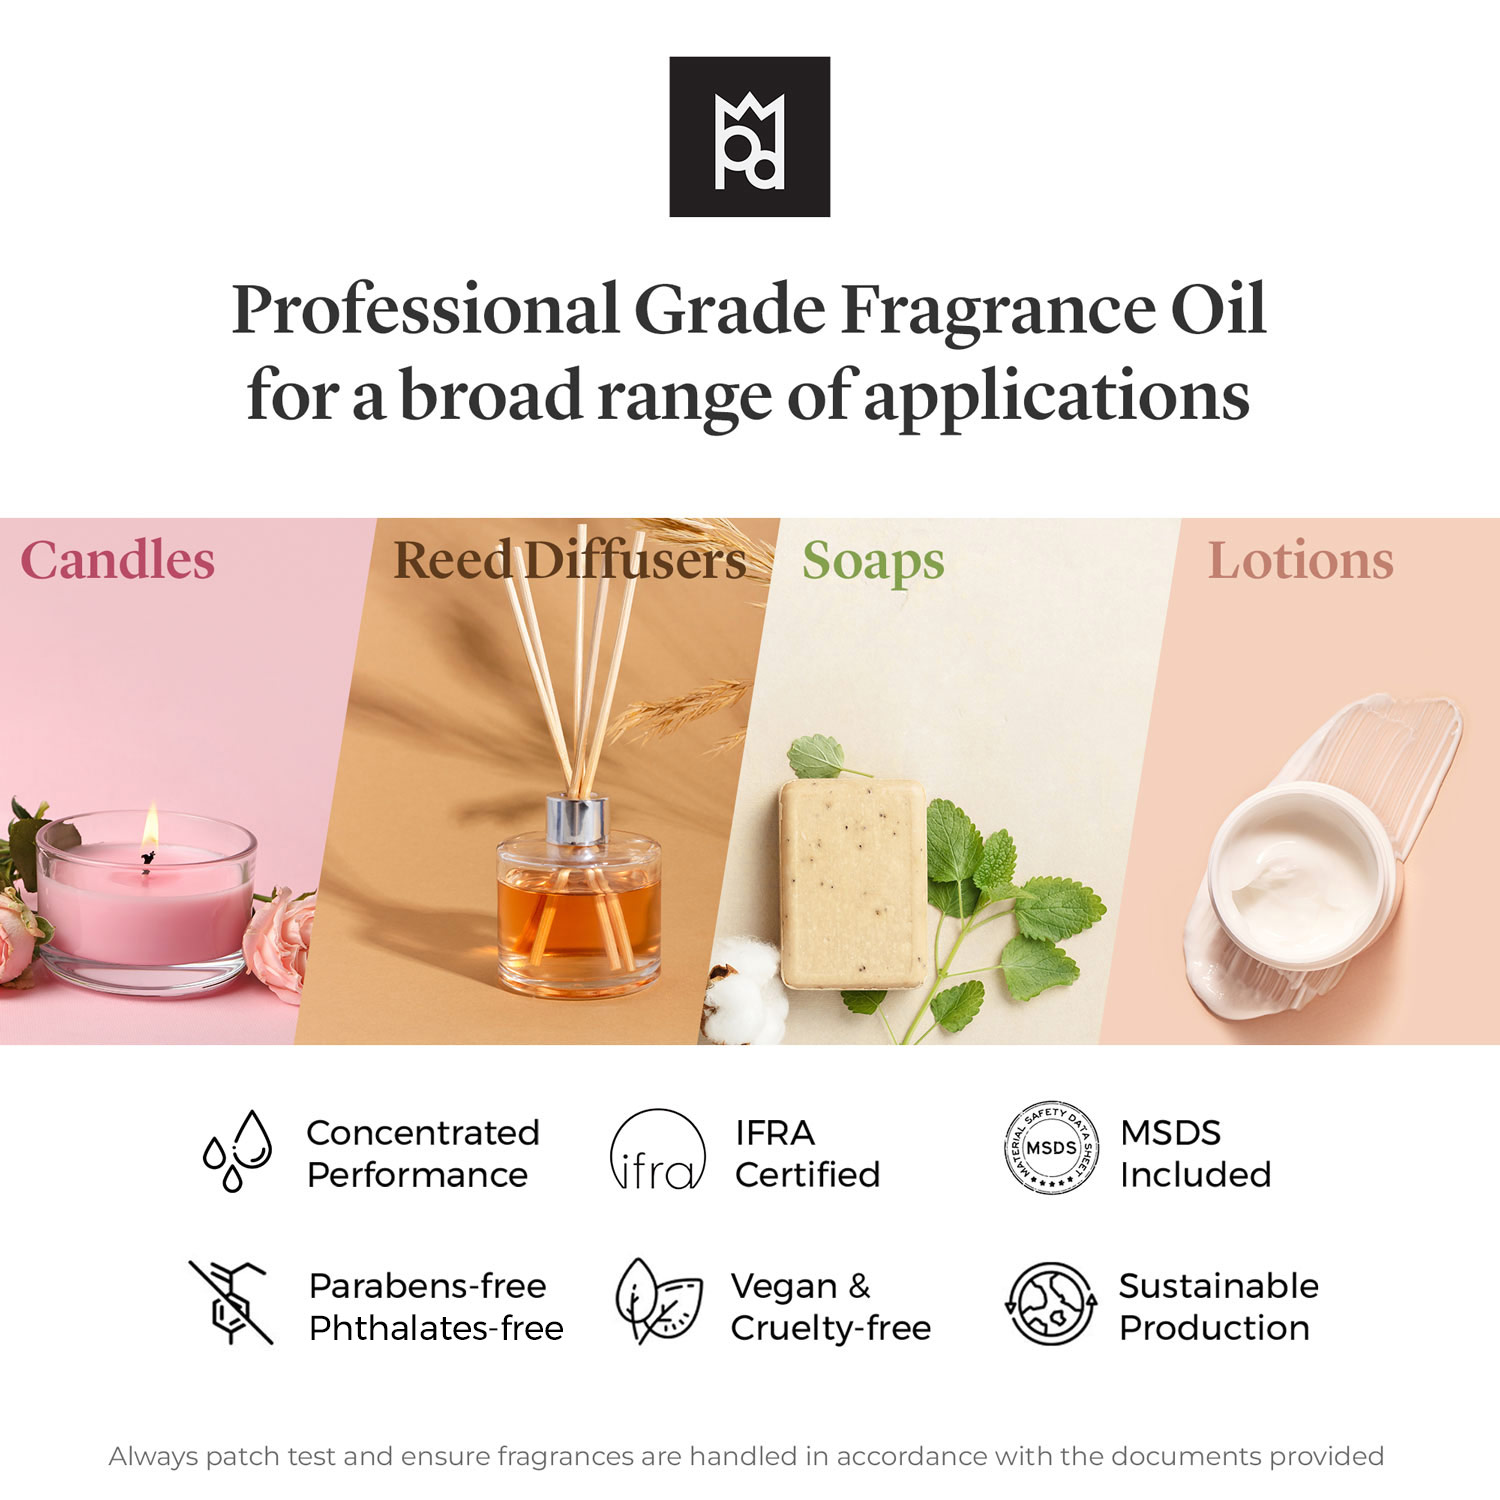  Fragrances & More - Orchard Bliss Fragrance Oil for